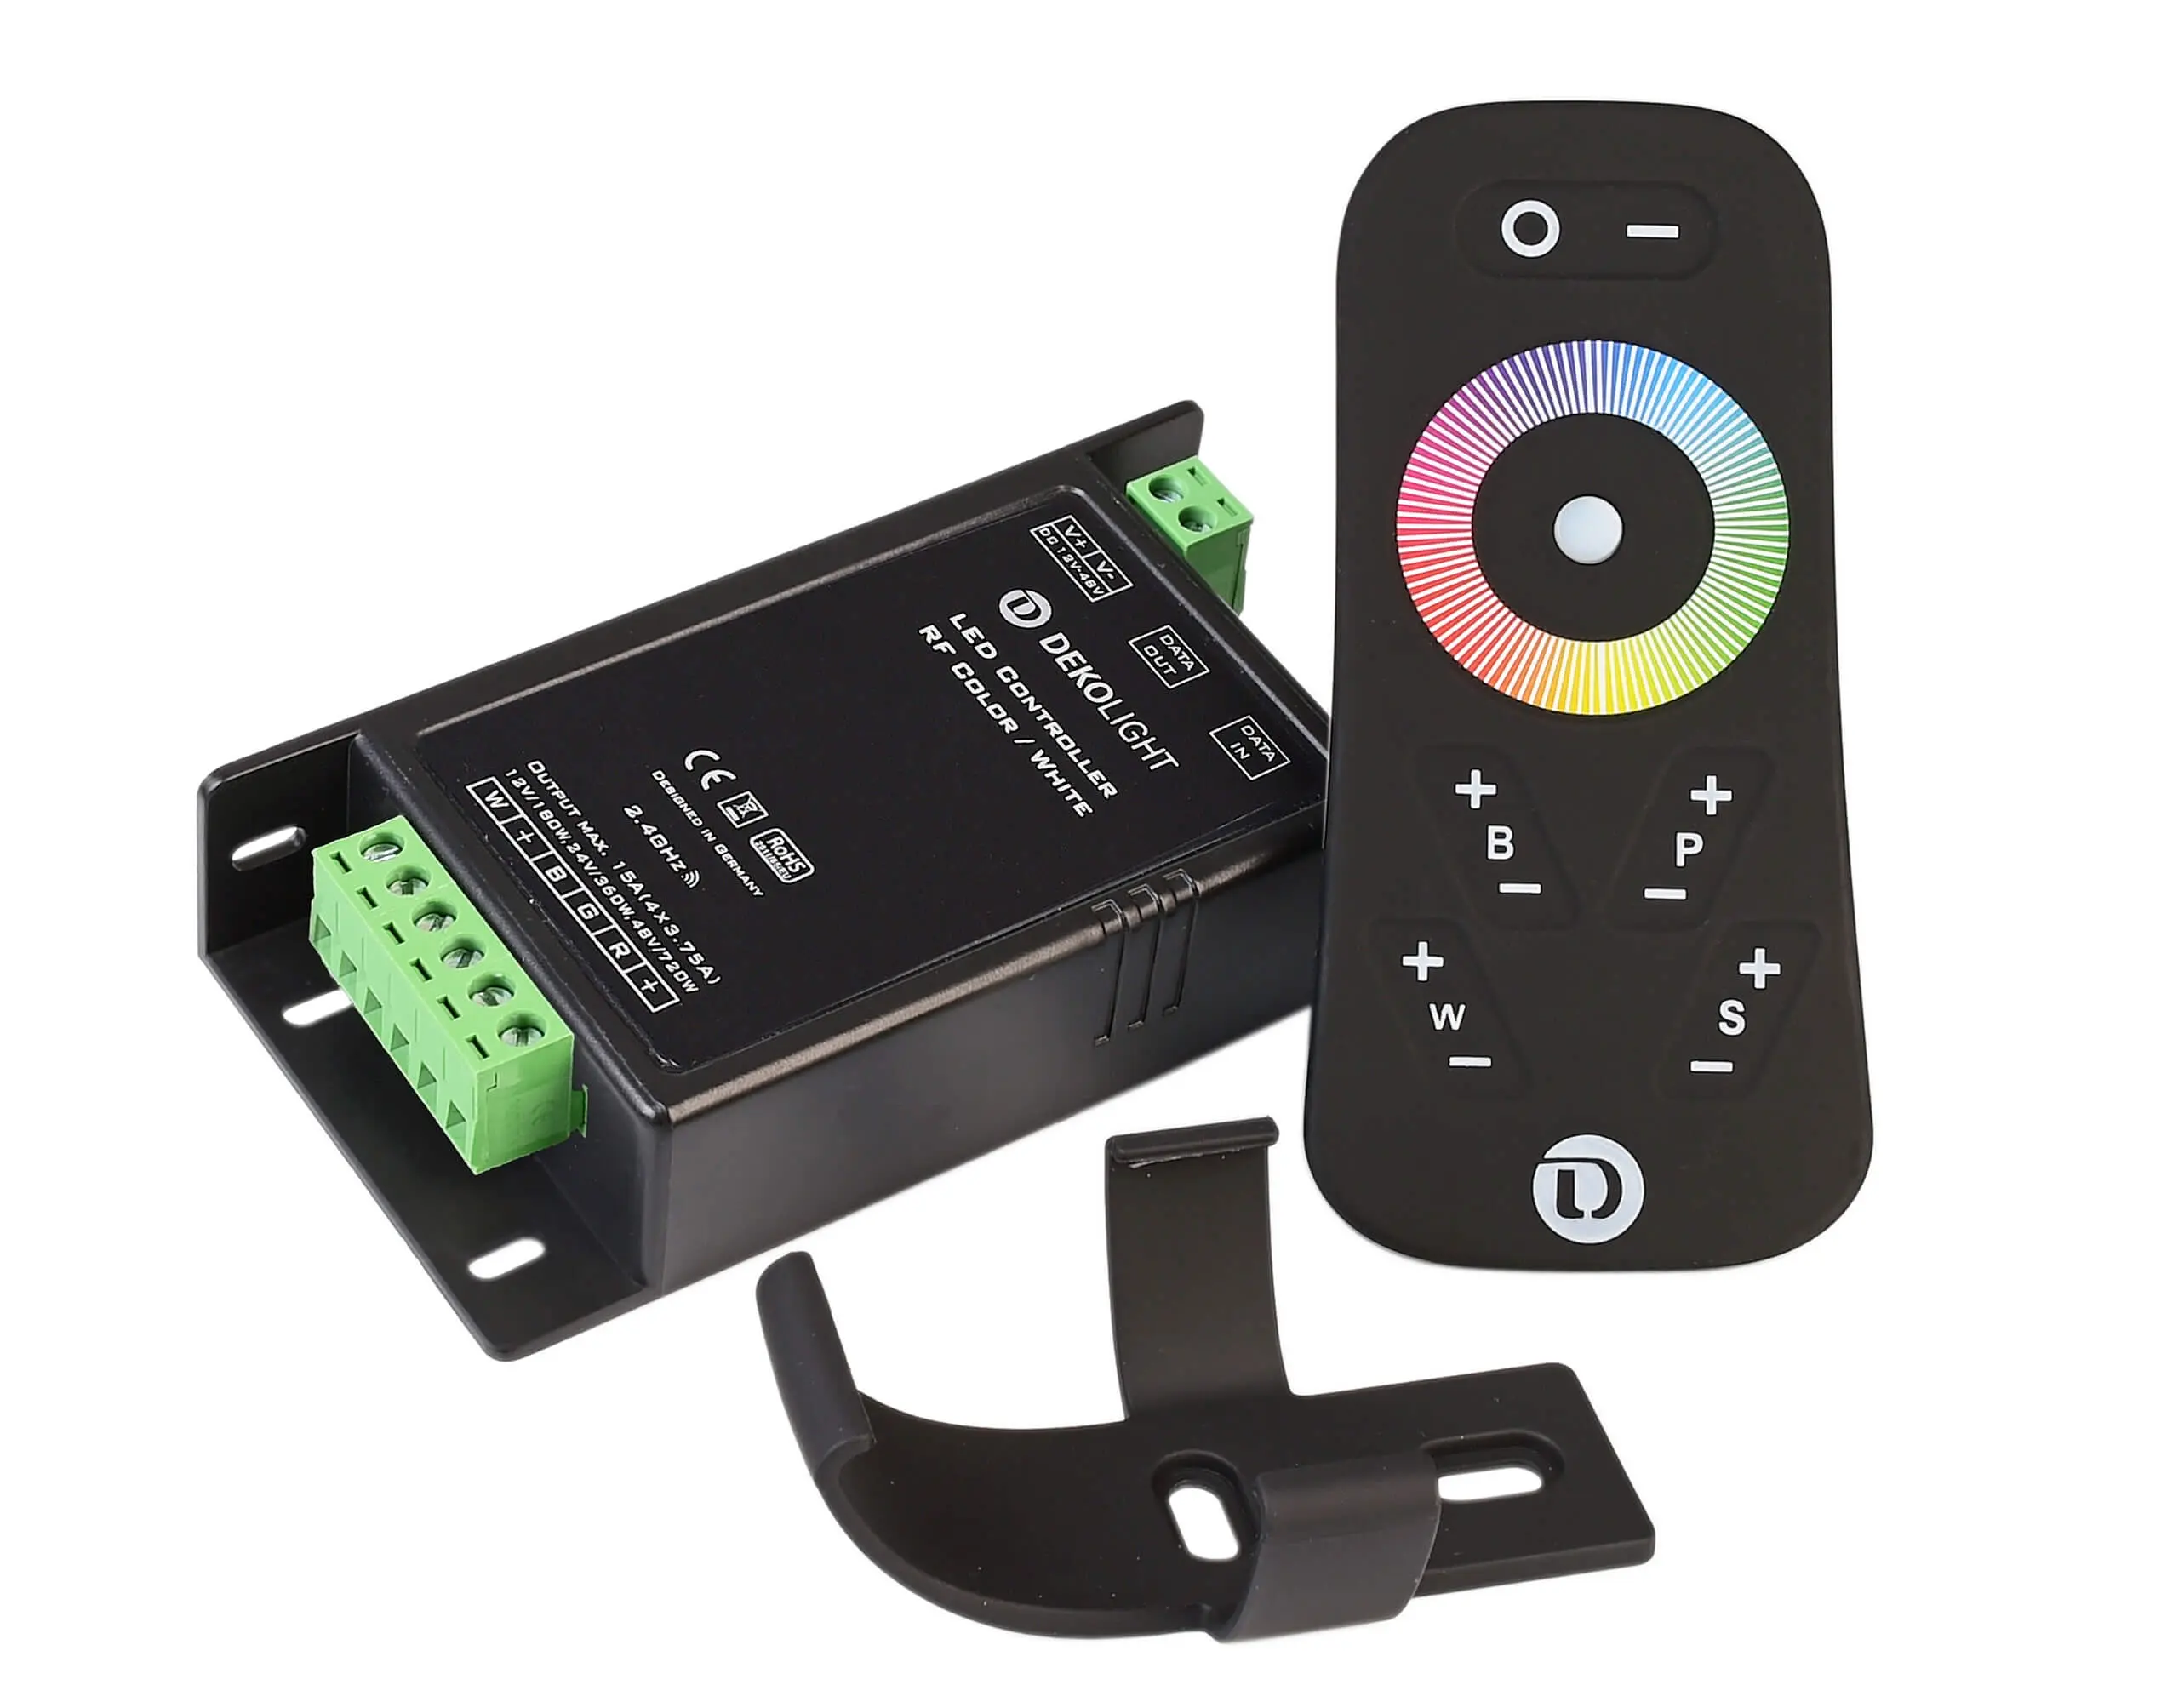 Controller RF Color & White Remote DIM 12V/24V/48V DC